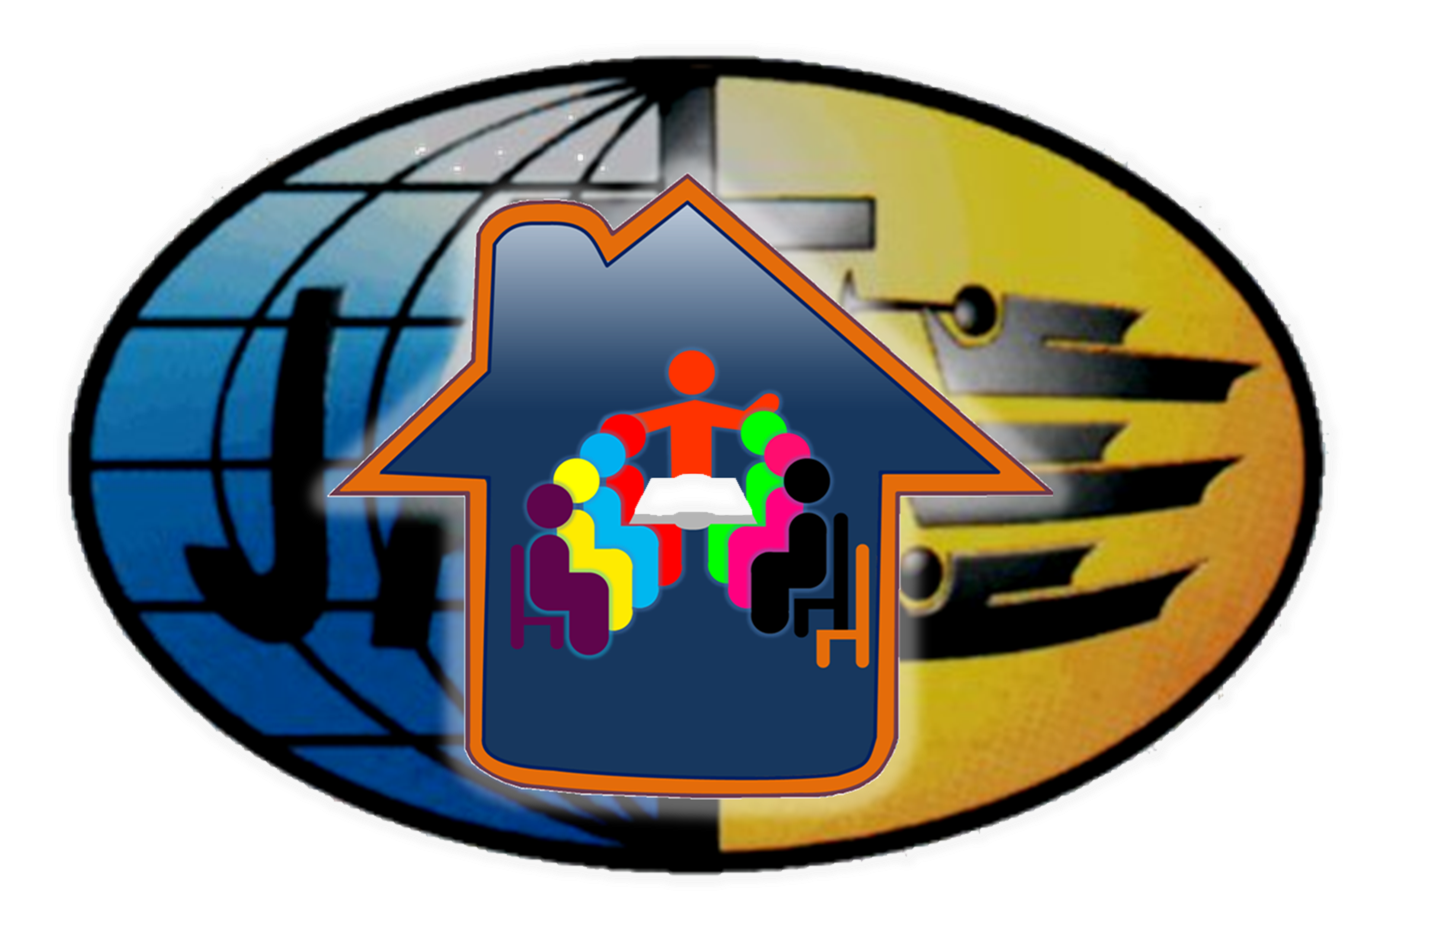 IASD AHOGATORO - Logos Adventistas